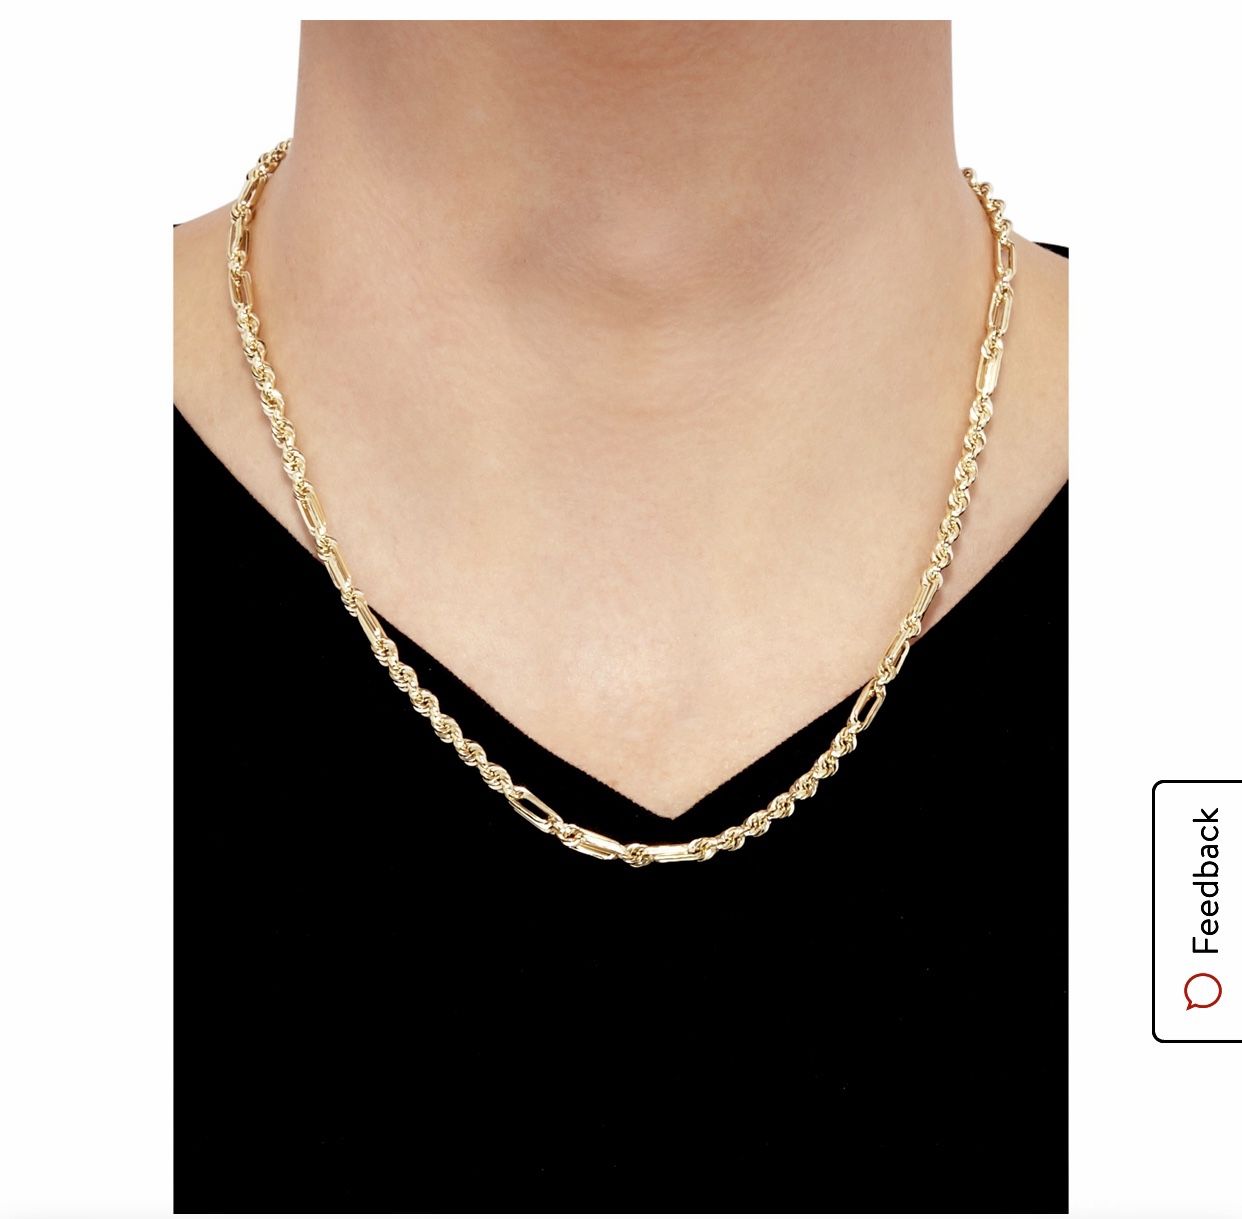 Brand new 10k necklace